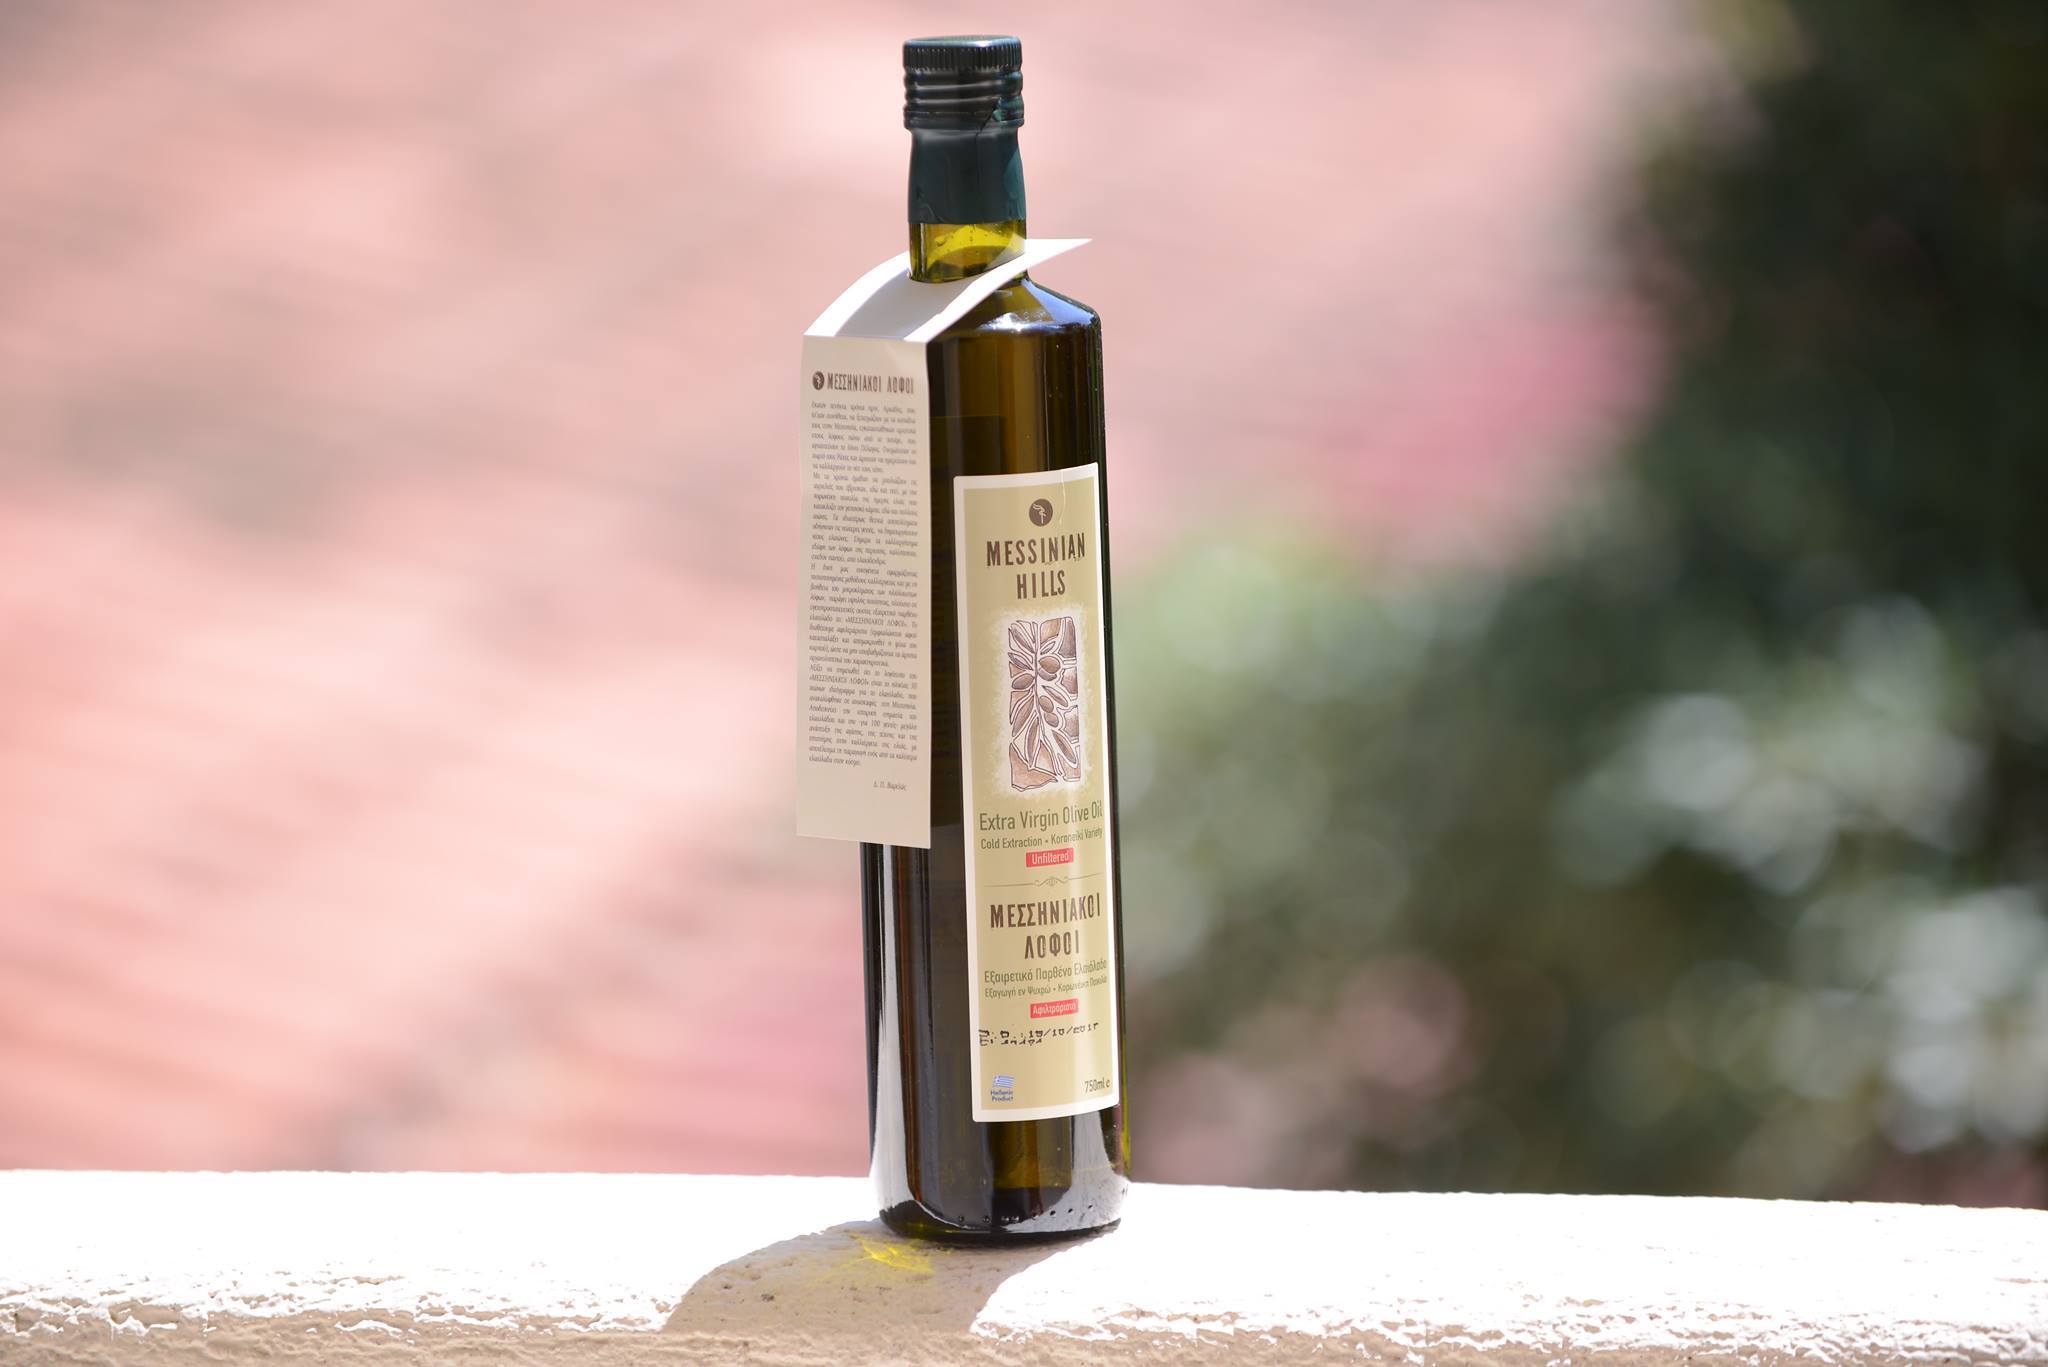 "Messinian Hills" Extra Virgin Olive Oil